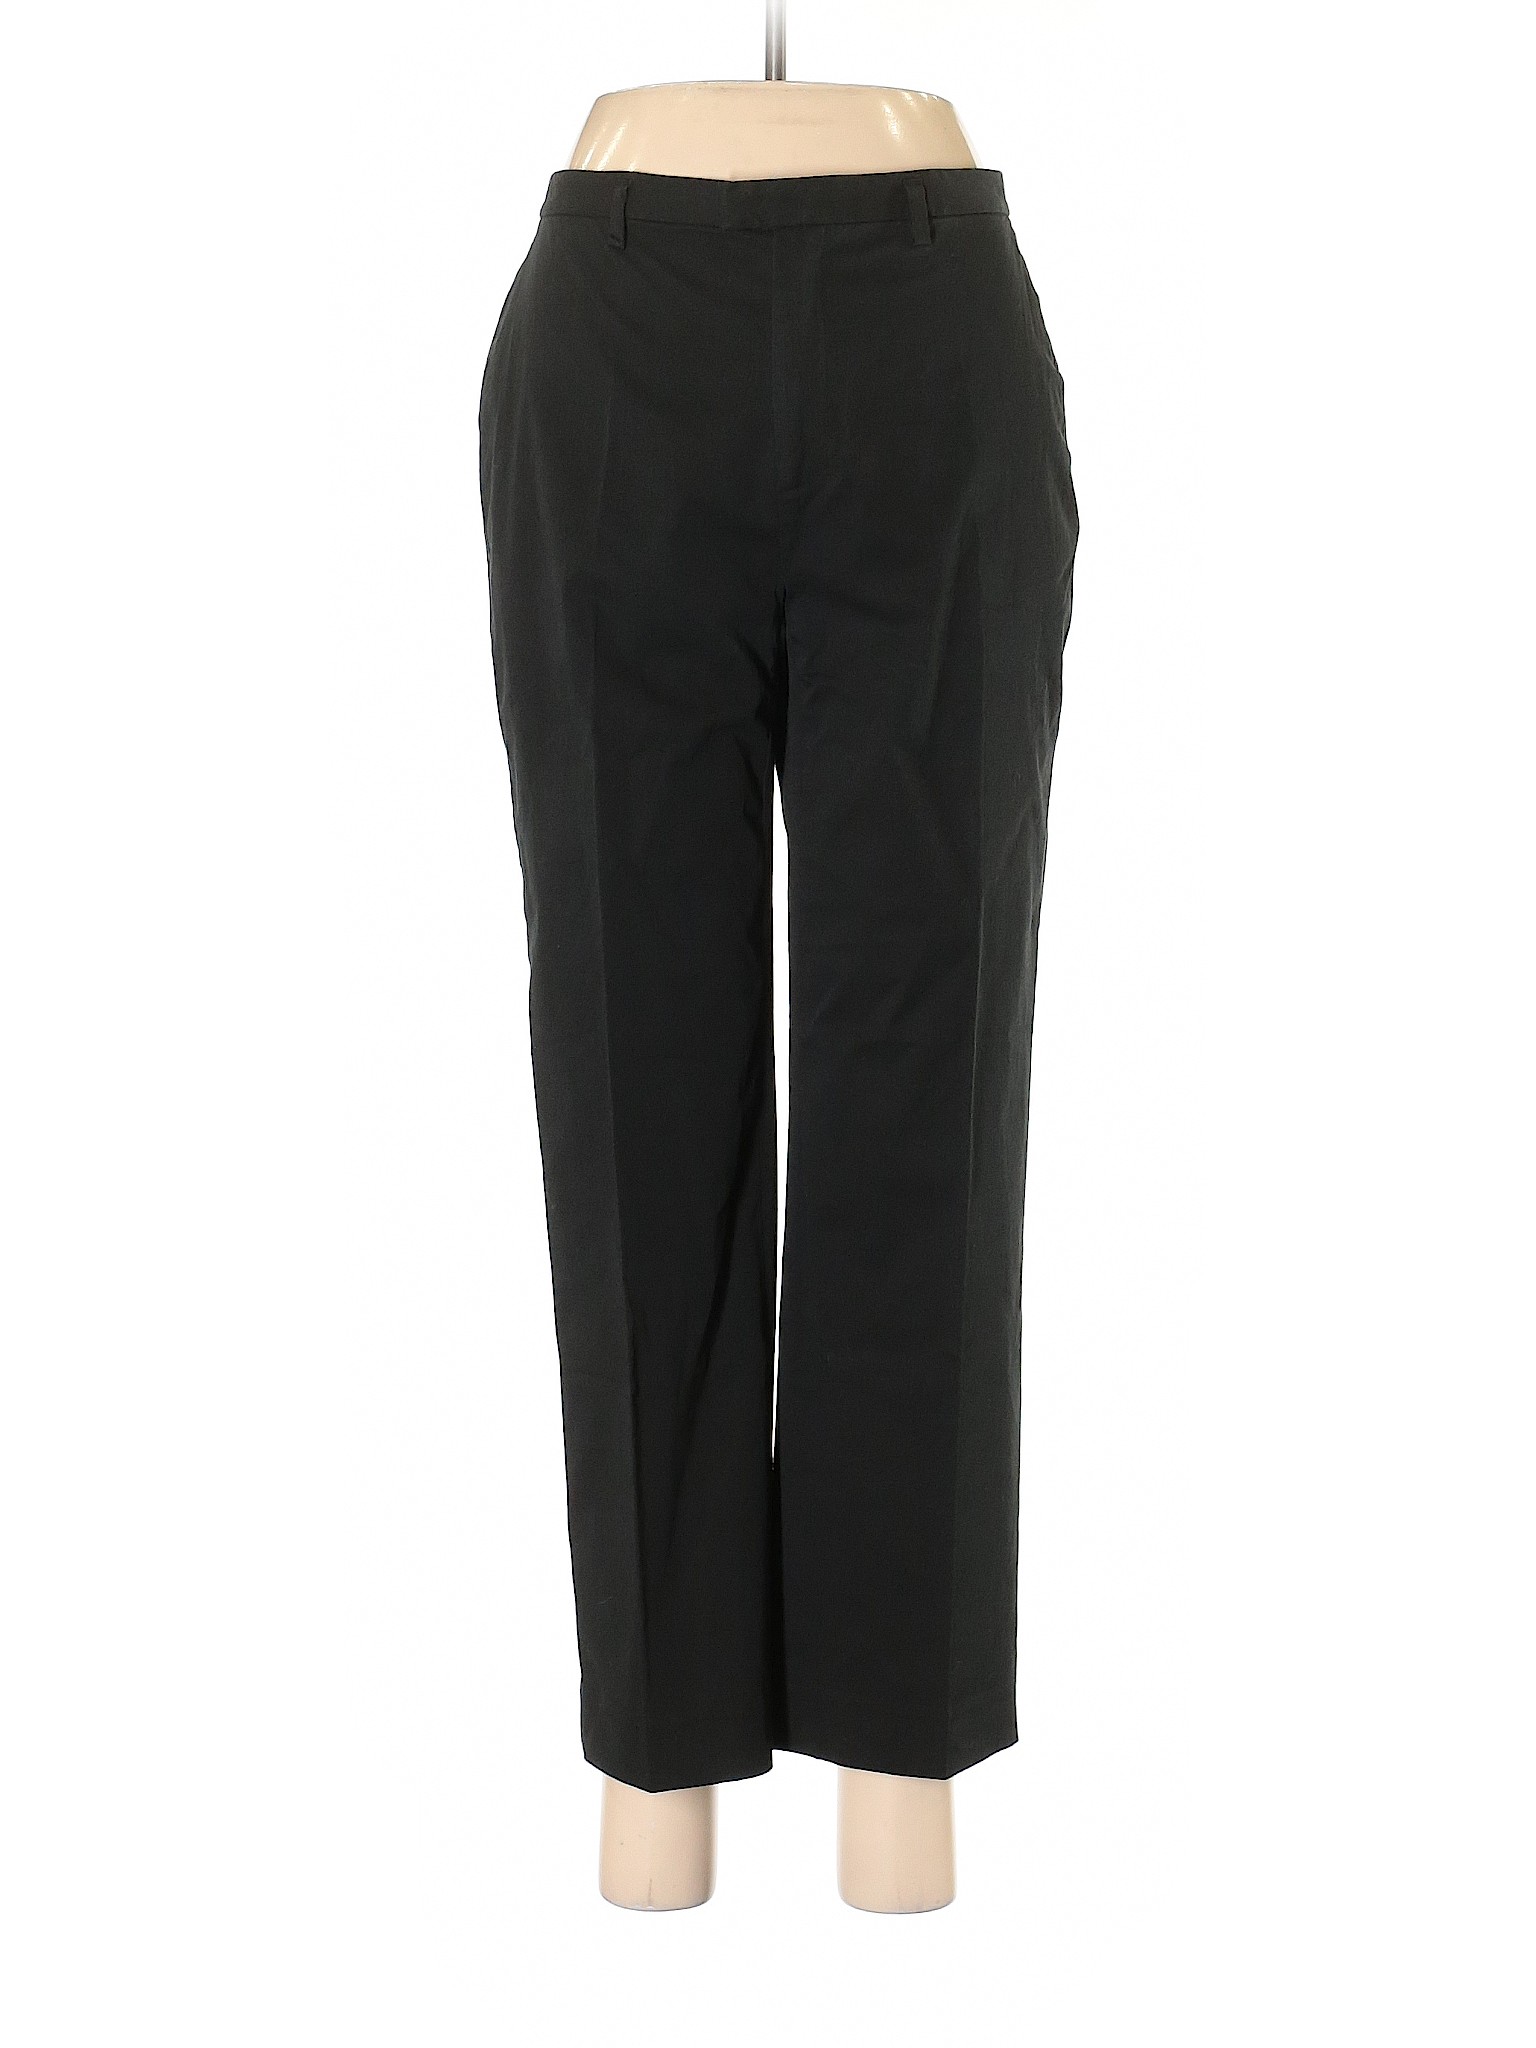 Banana Republic Women Black Casual Pants 6 | eBay